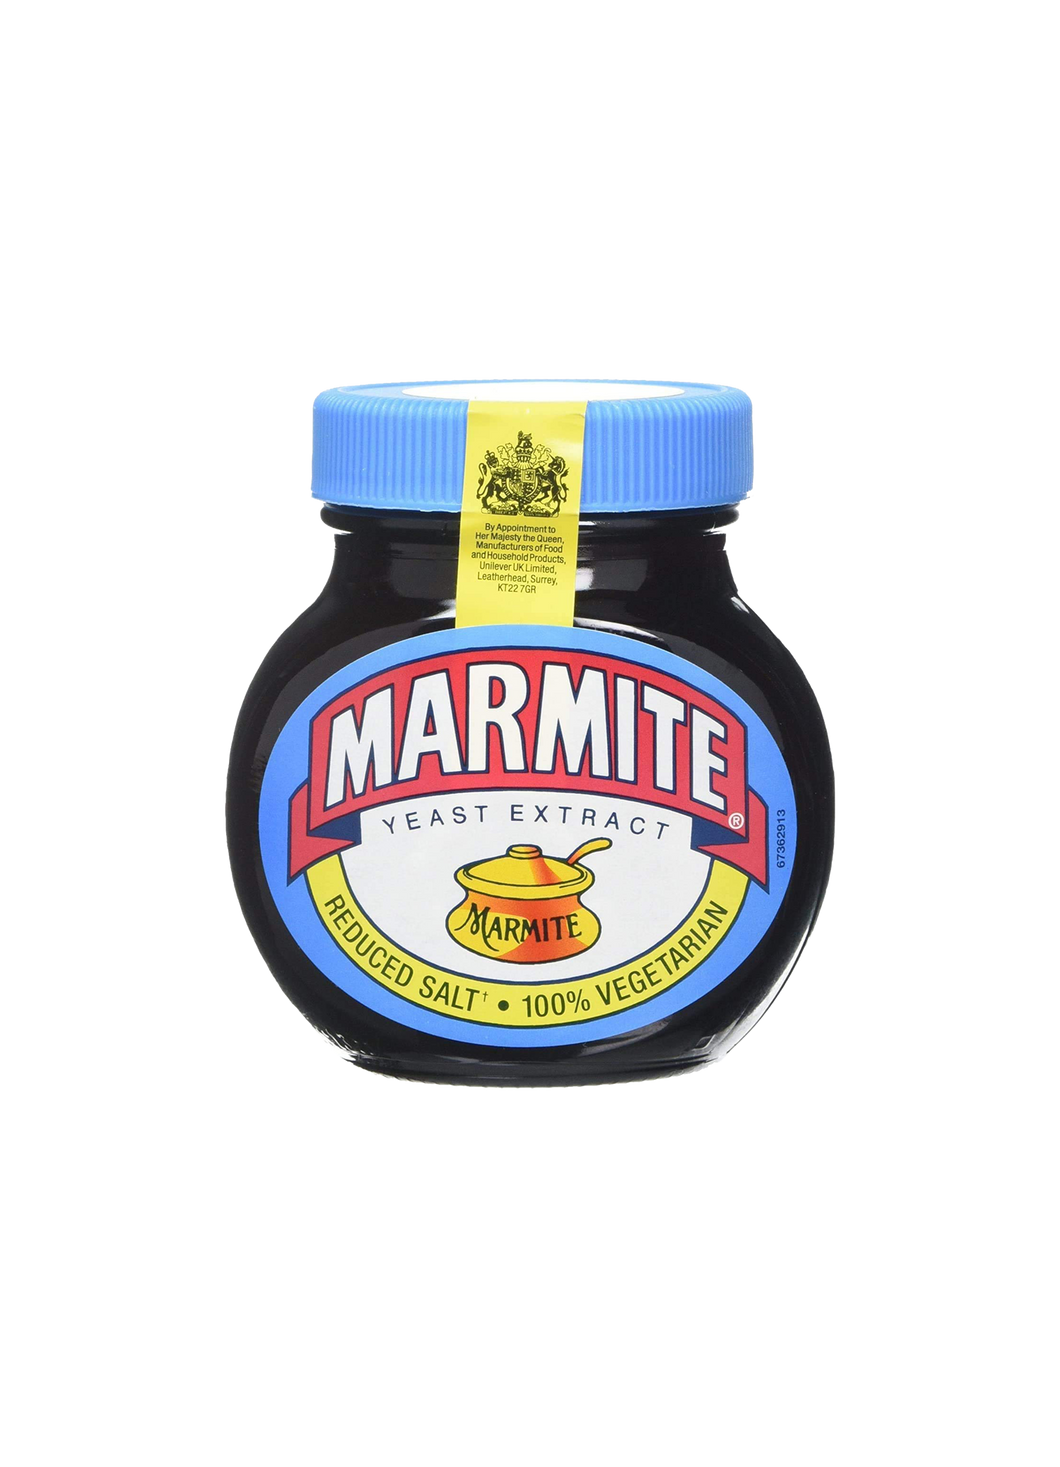 Marmite Yeast Extract Reduced Salt Vegan Spread 250g